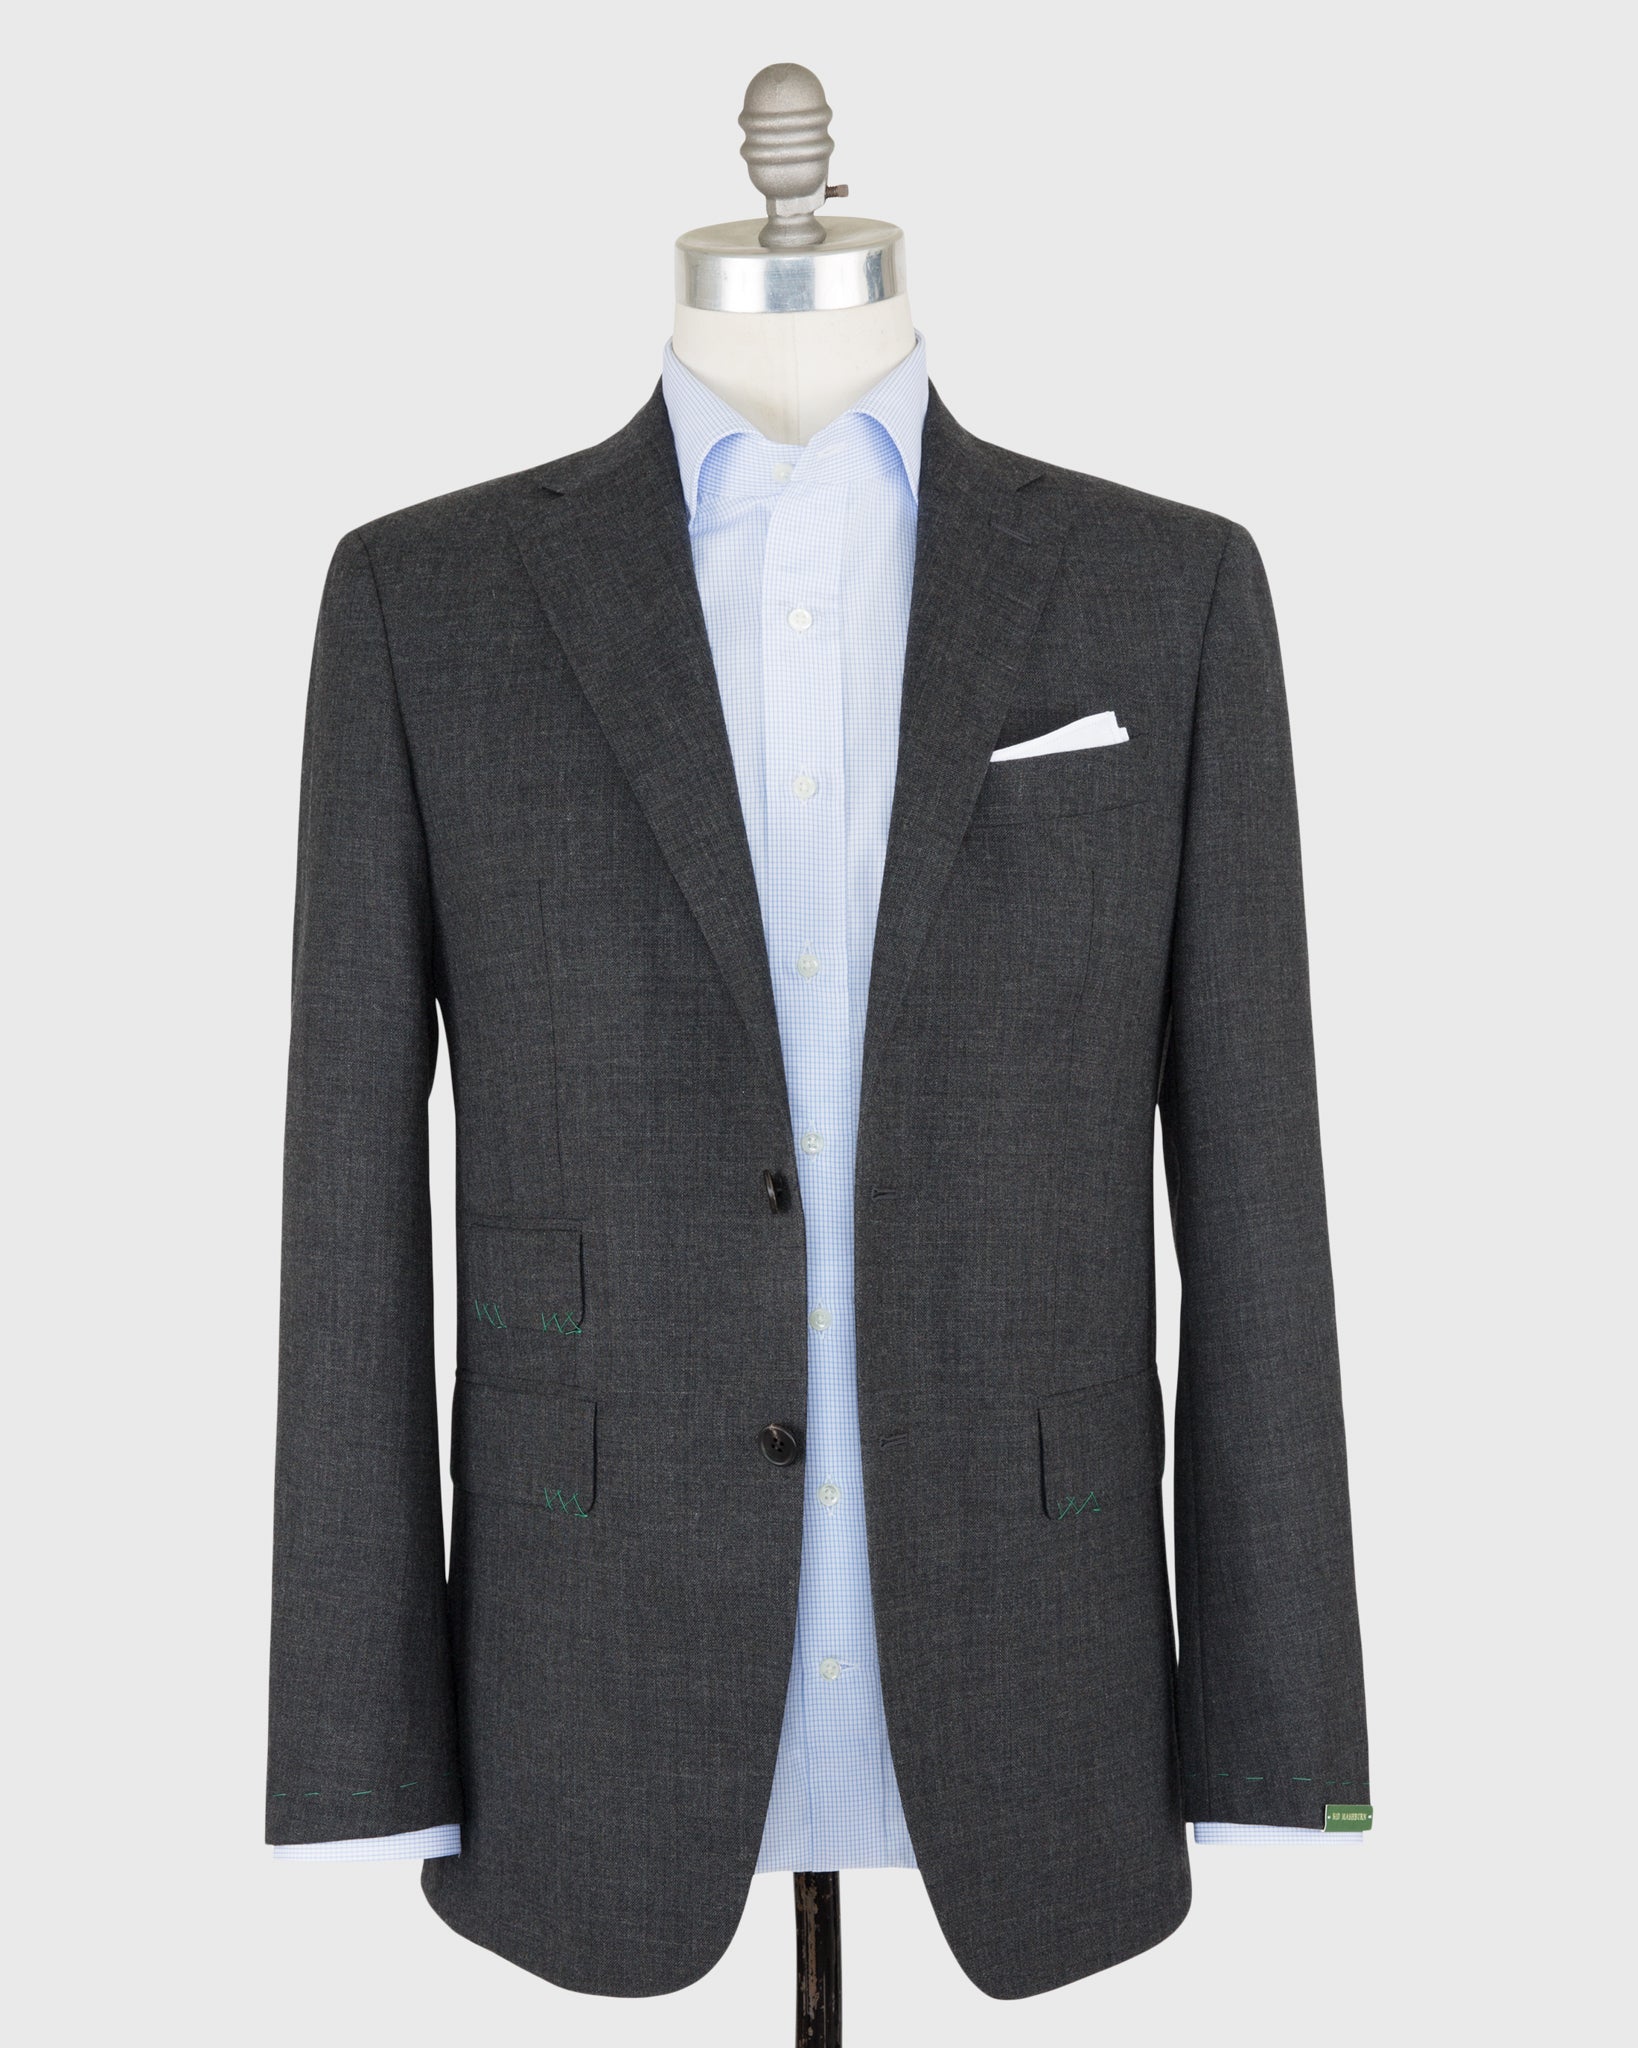 Kincaid No. 3 Suit Charcoal High-Twist